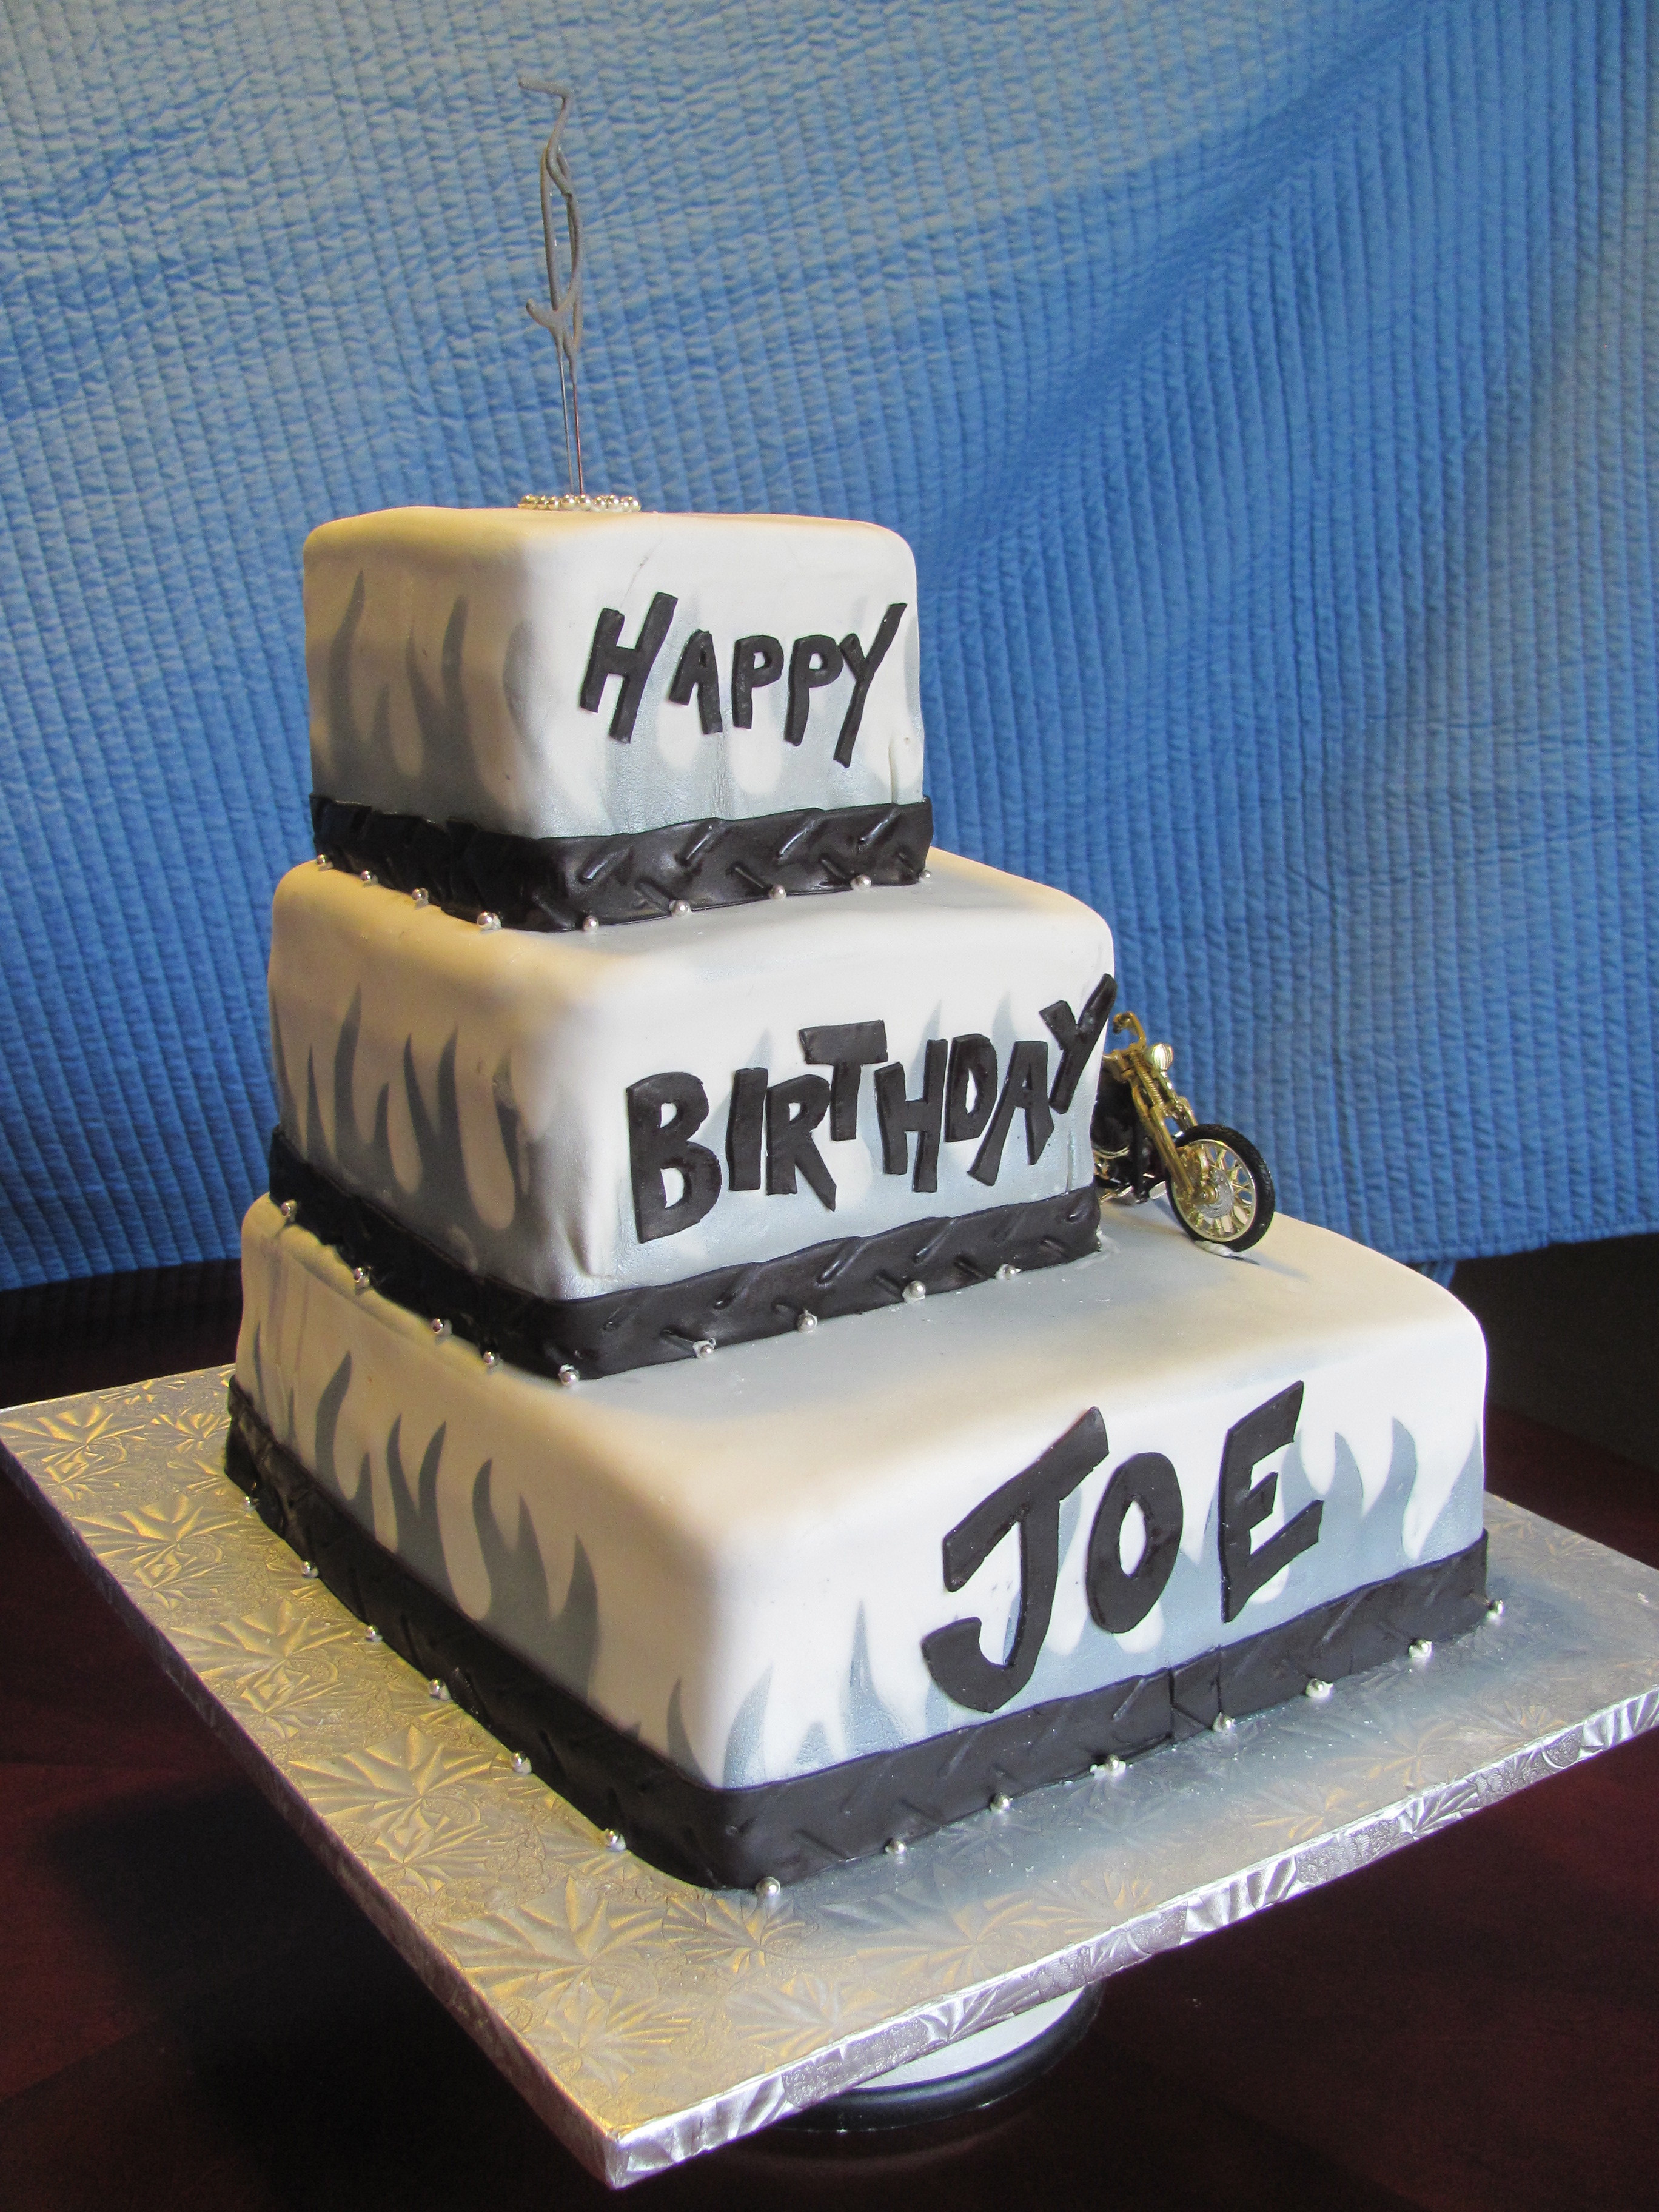 Best ideas about Happy Birthday Joe Cake
. Save or Pin Happy Birthday Joe Now.